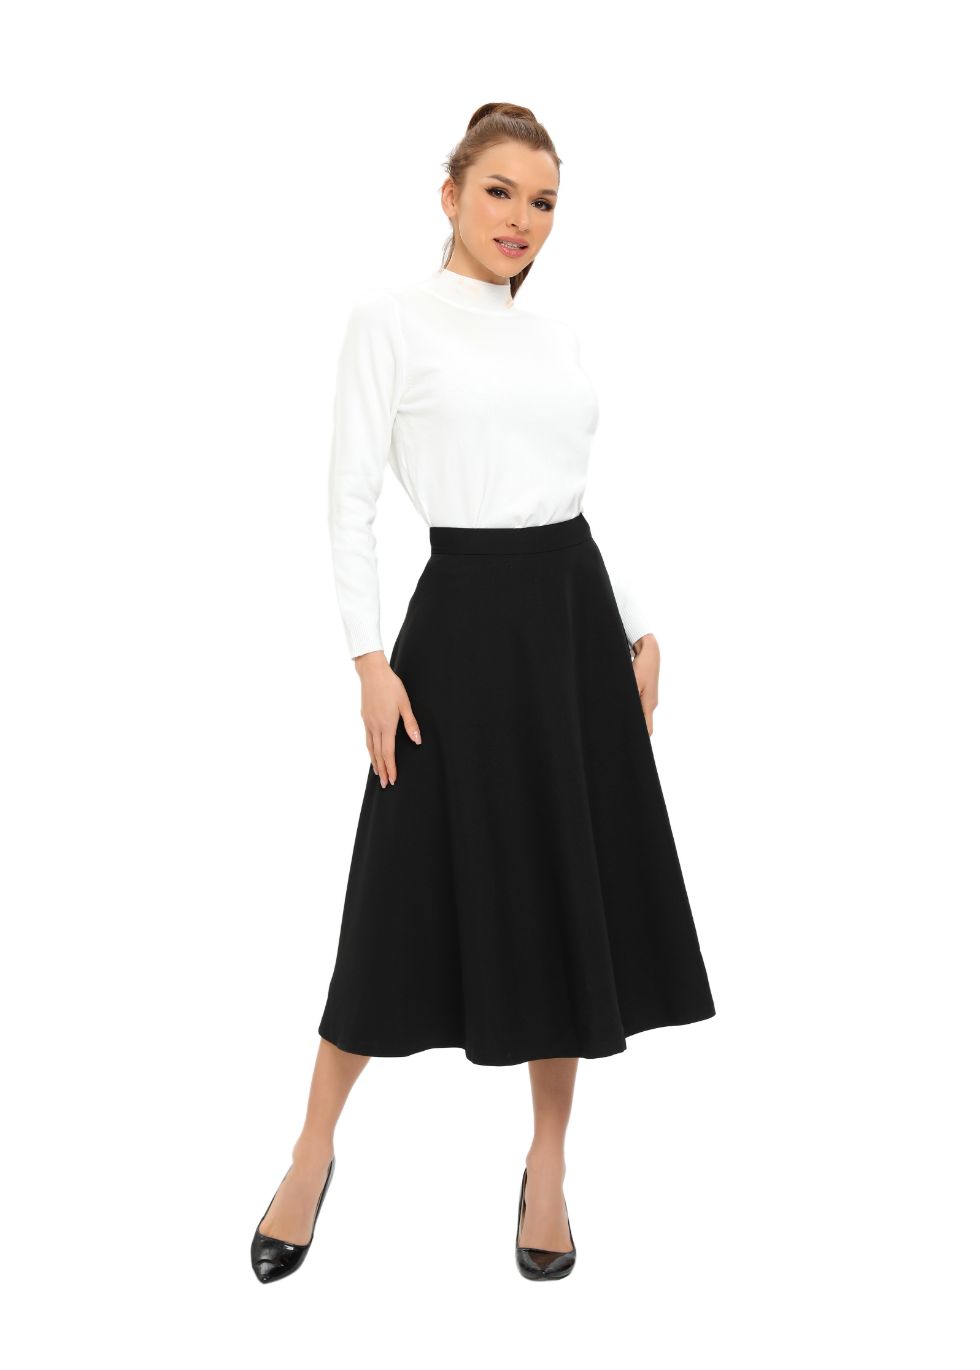 Classic Black A-Line 31 Inch Skirt - MissFinchNYC